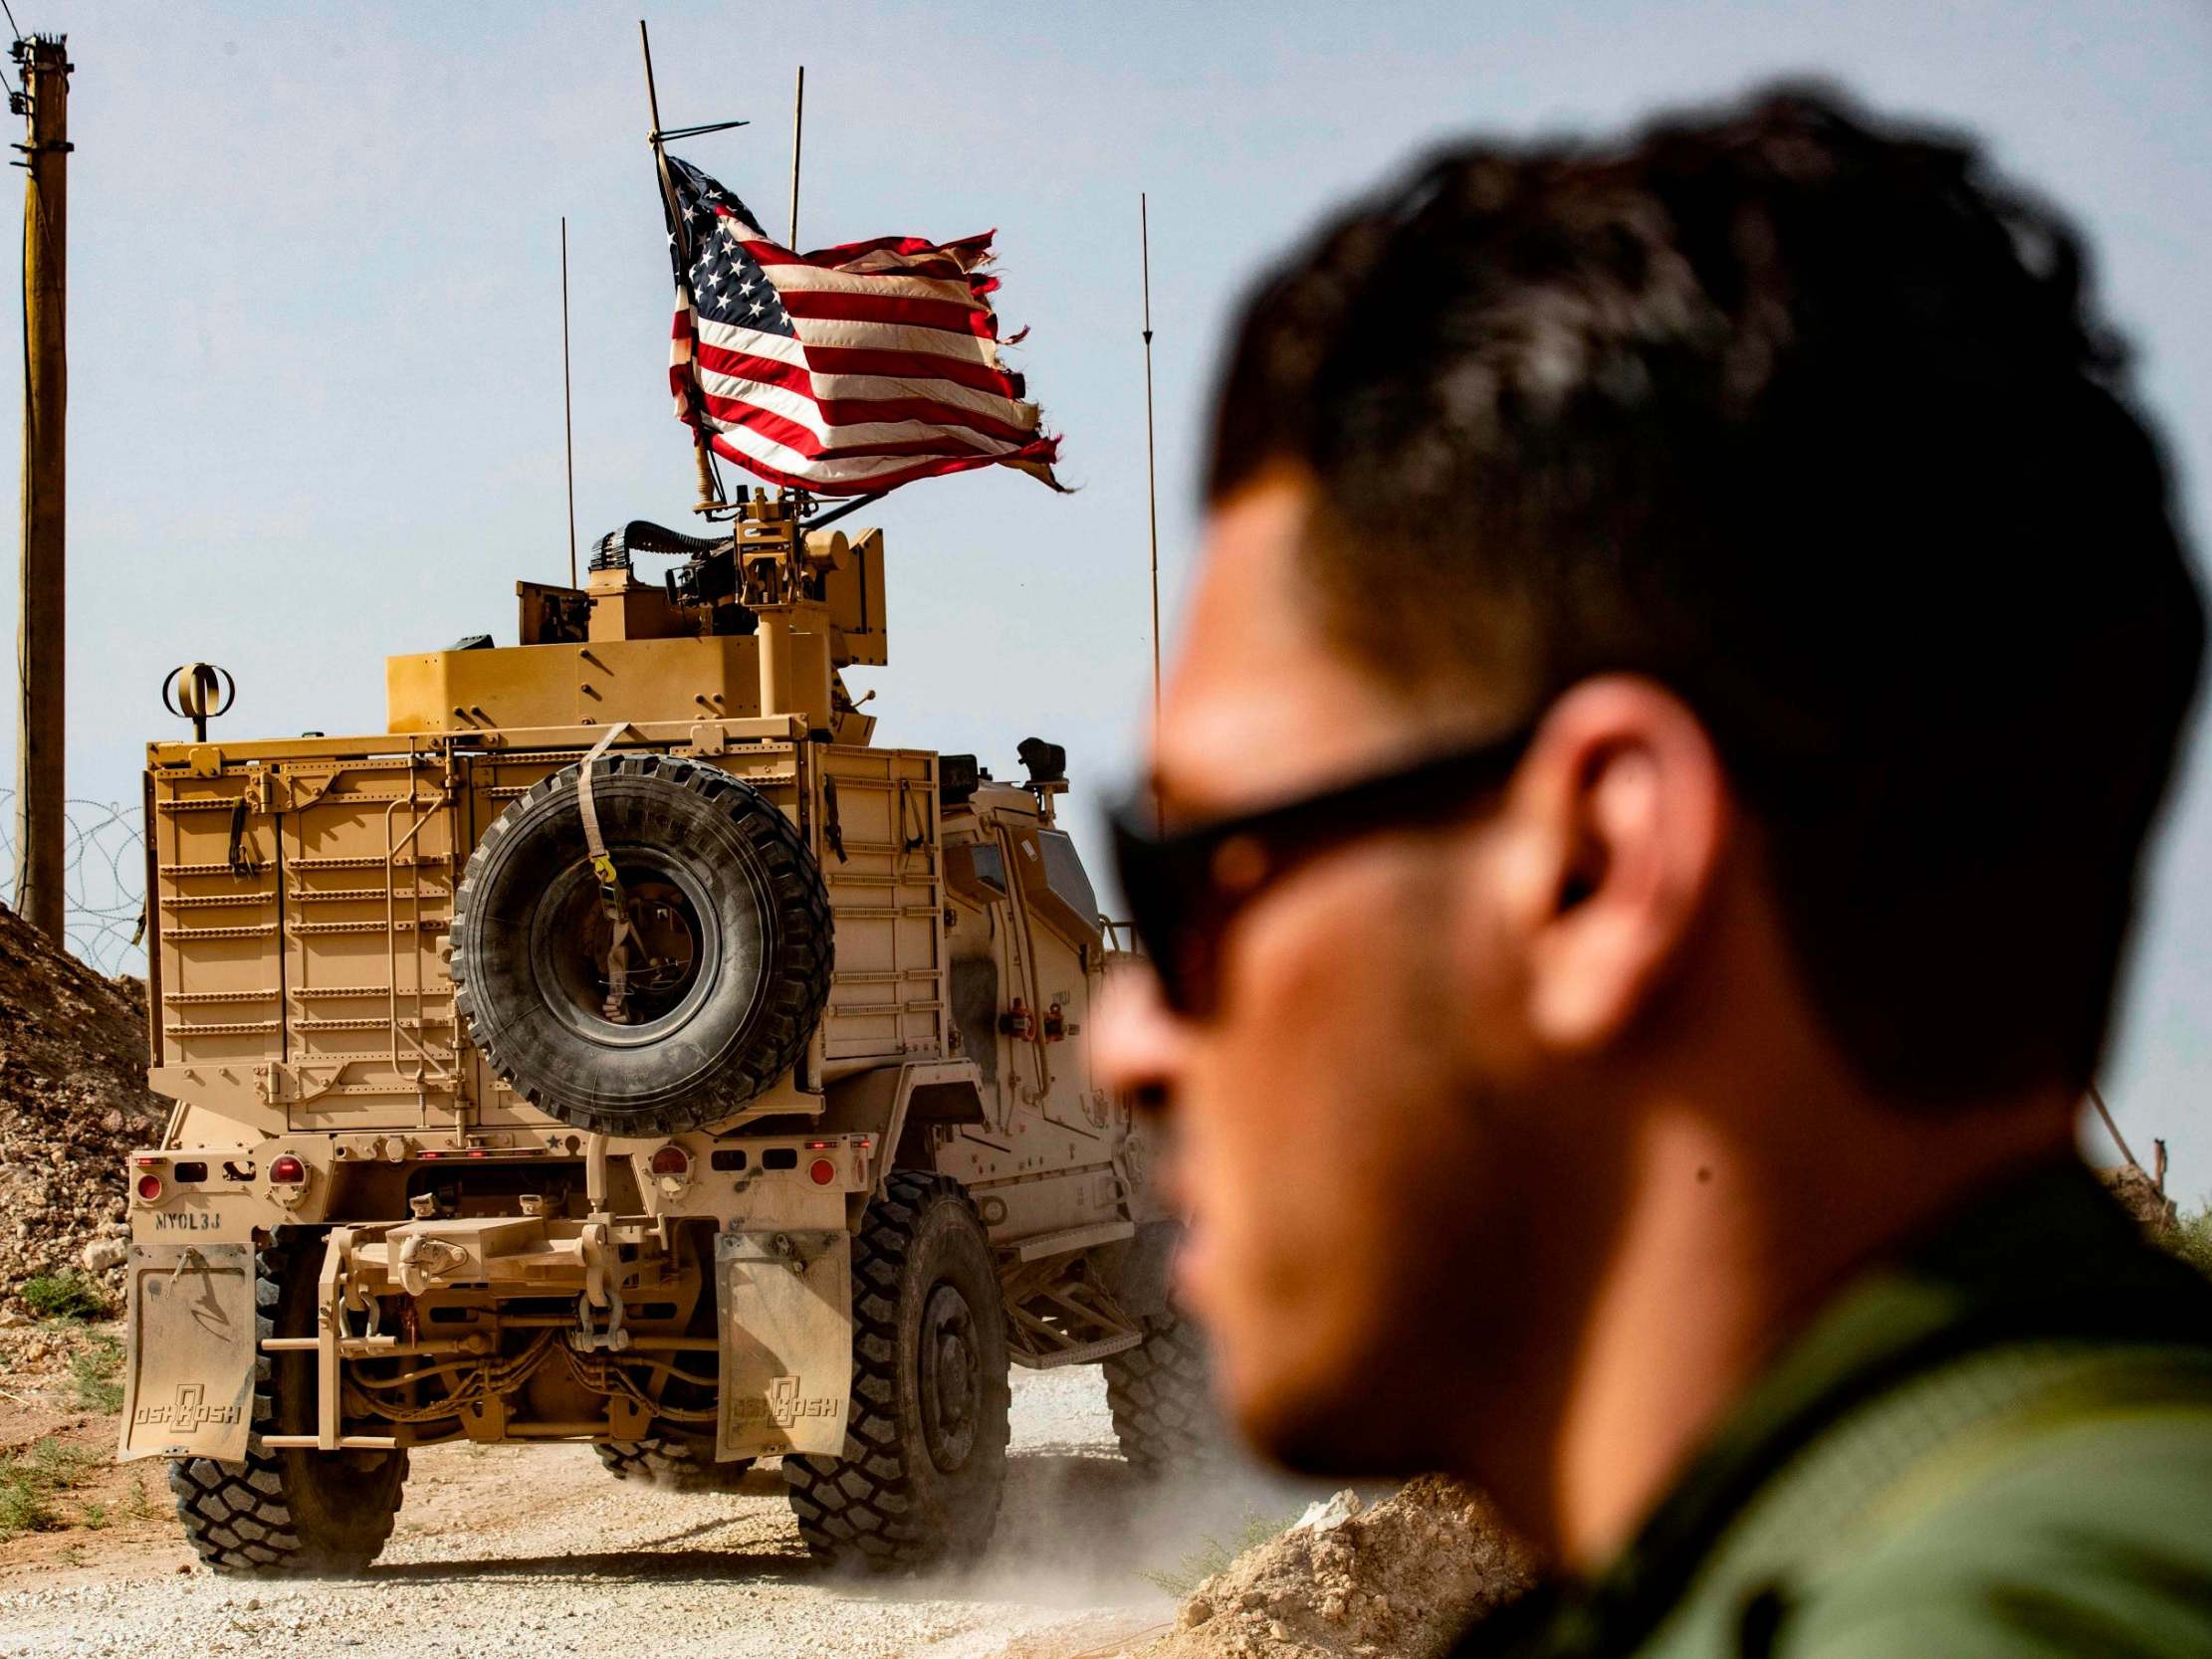 As a US military veteran, Trump's betrayal of the Kurds horrifies me